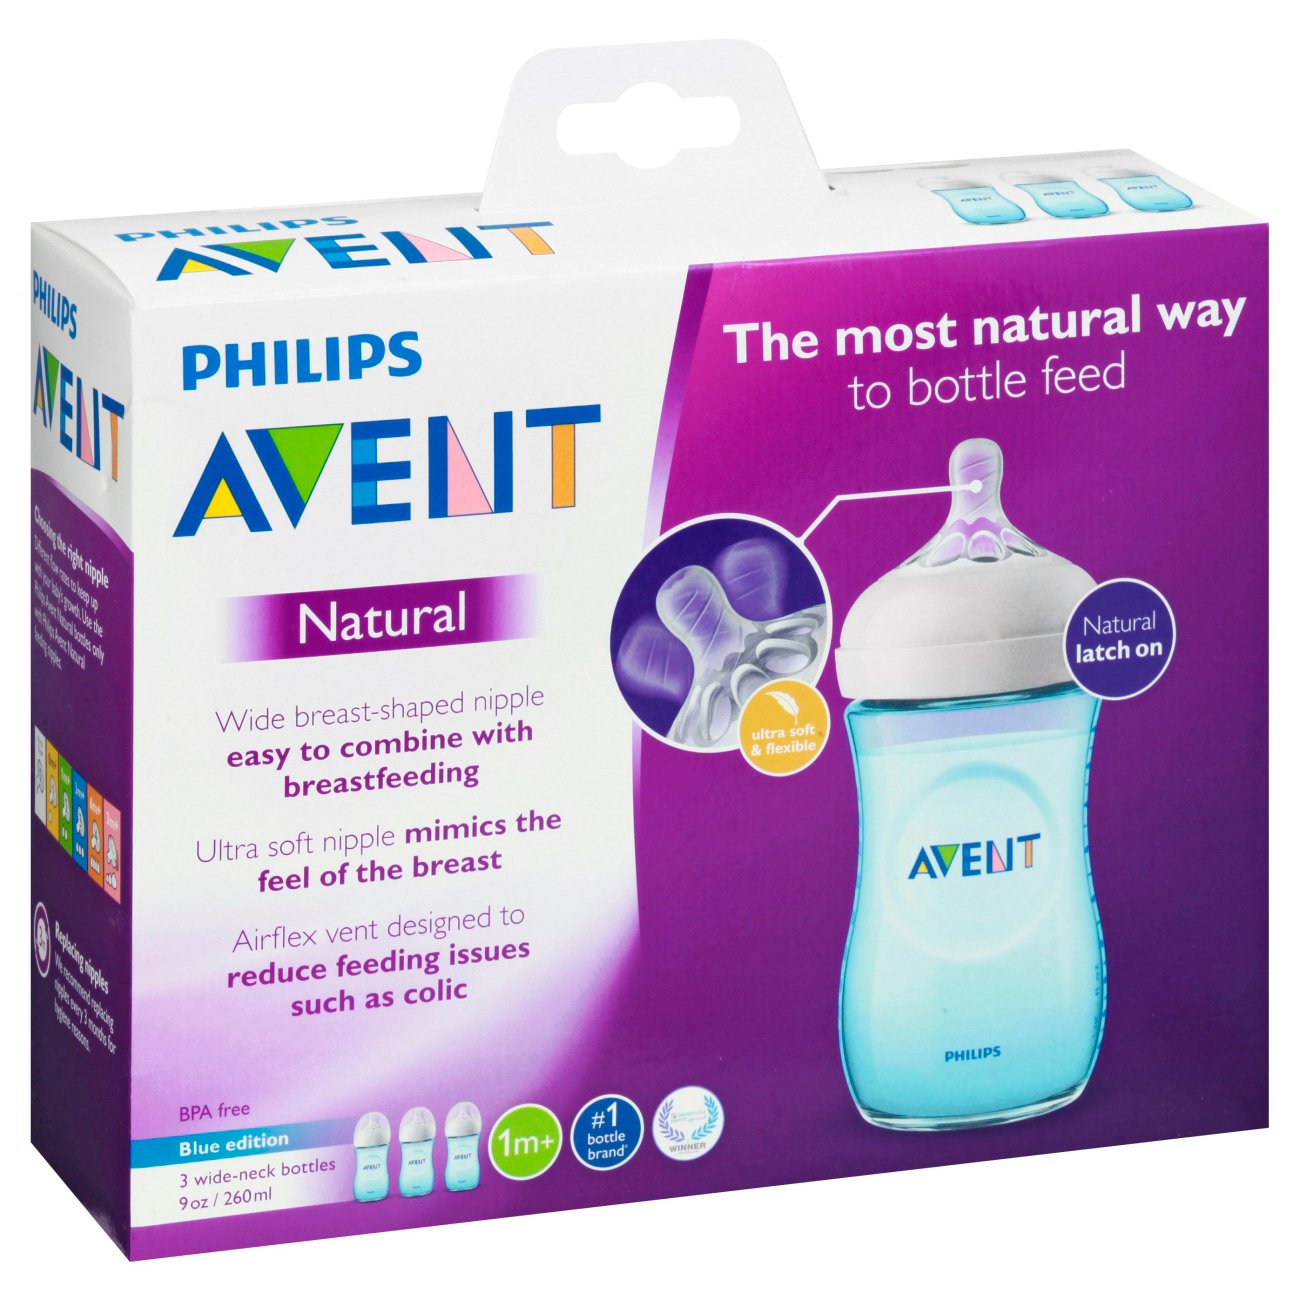 Philips Avent, Anti-Colic Bottle, 1 + Months, 2 Bottles, 9 oz (260 ml) Each